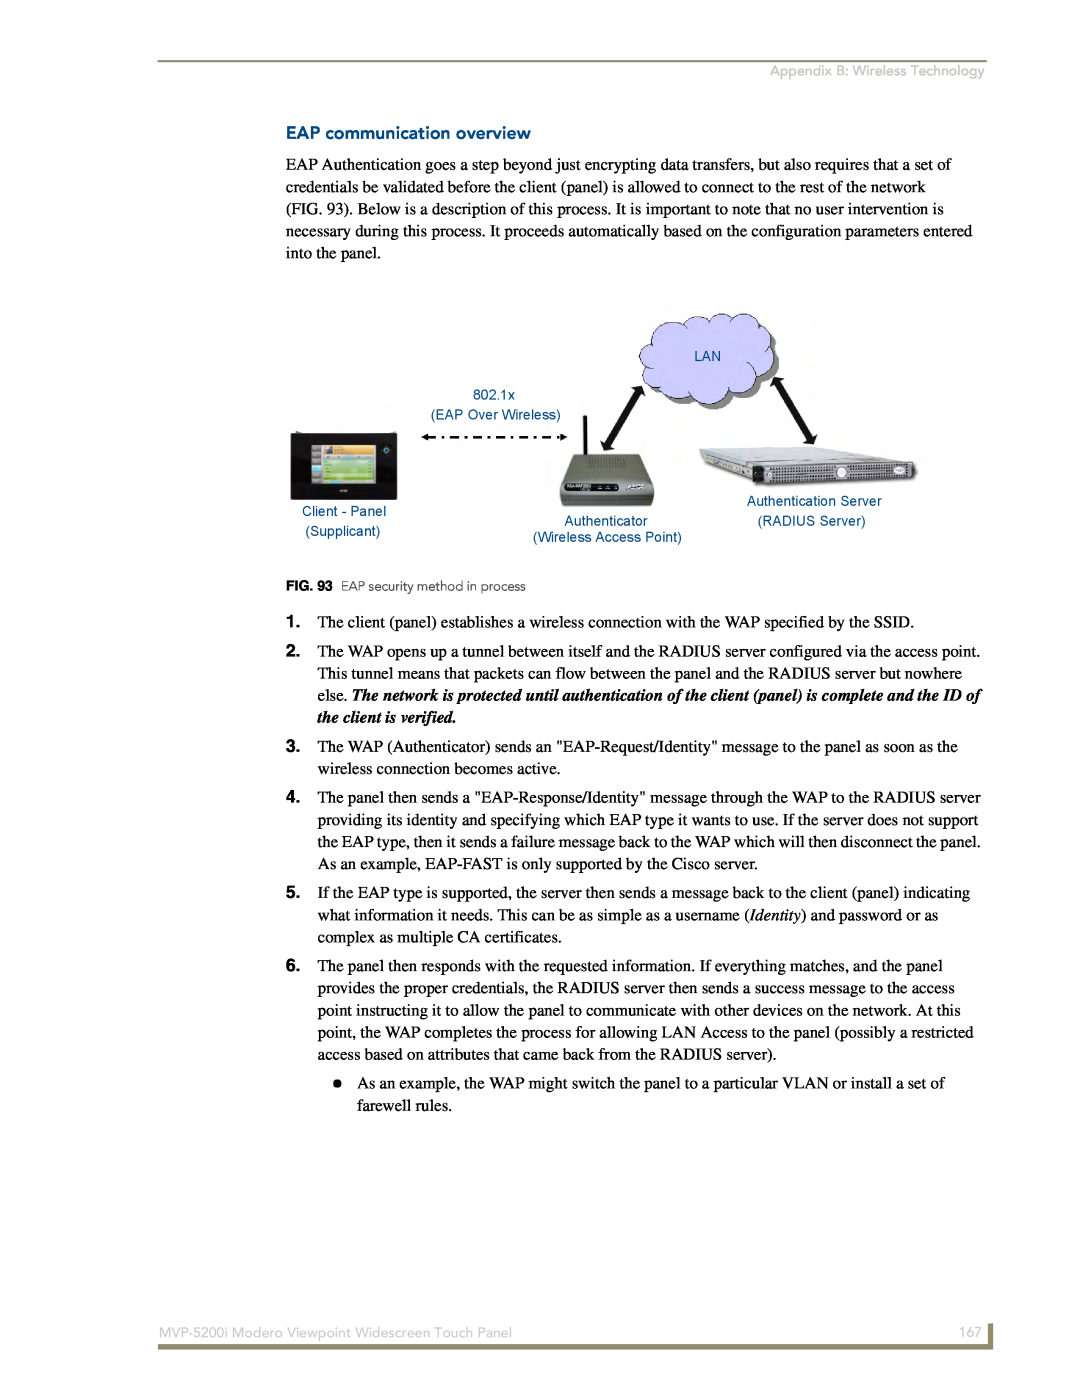 AMX MVP-5200i manual EAP communication overview, LAN 802.1x EAP Over Wireless, Client - Panel, RADIUS Server 